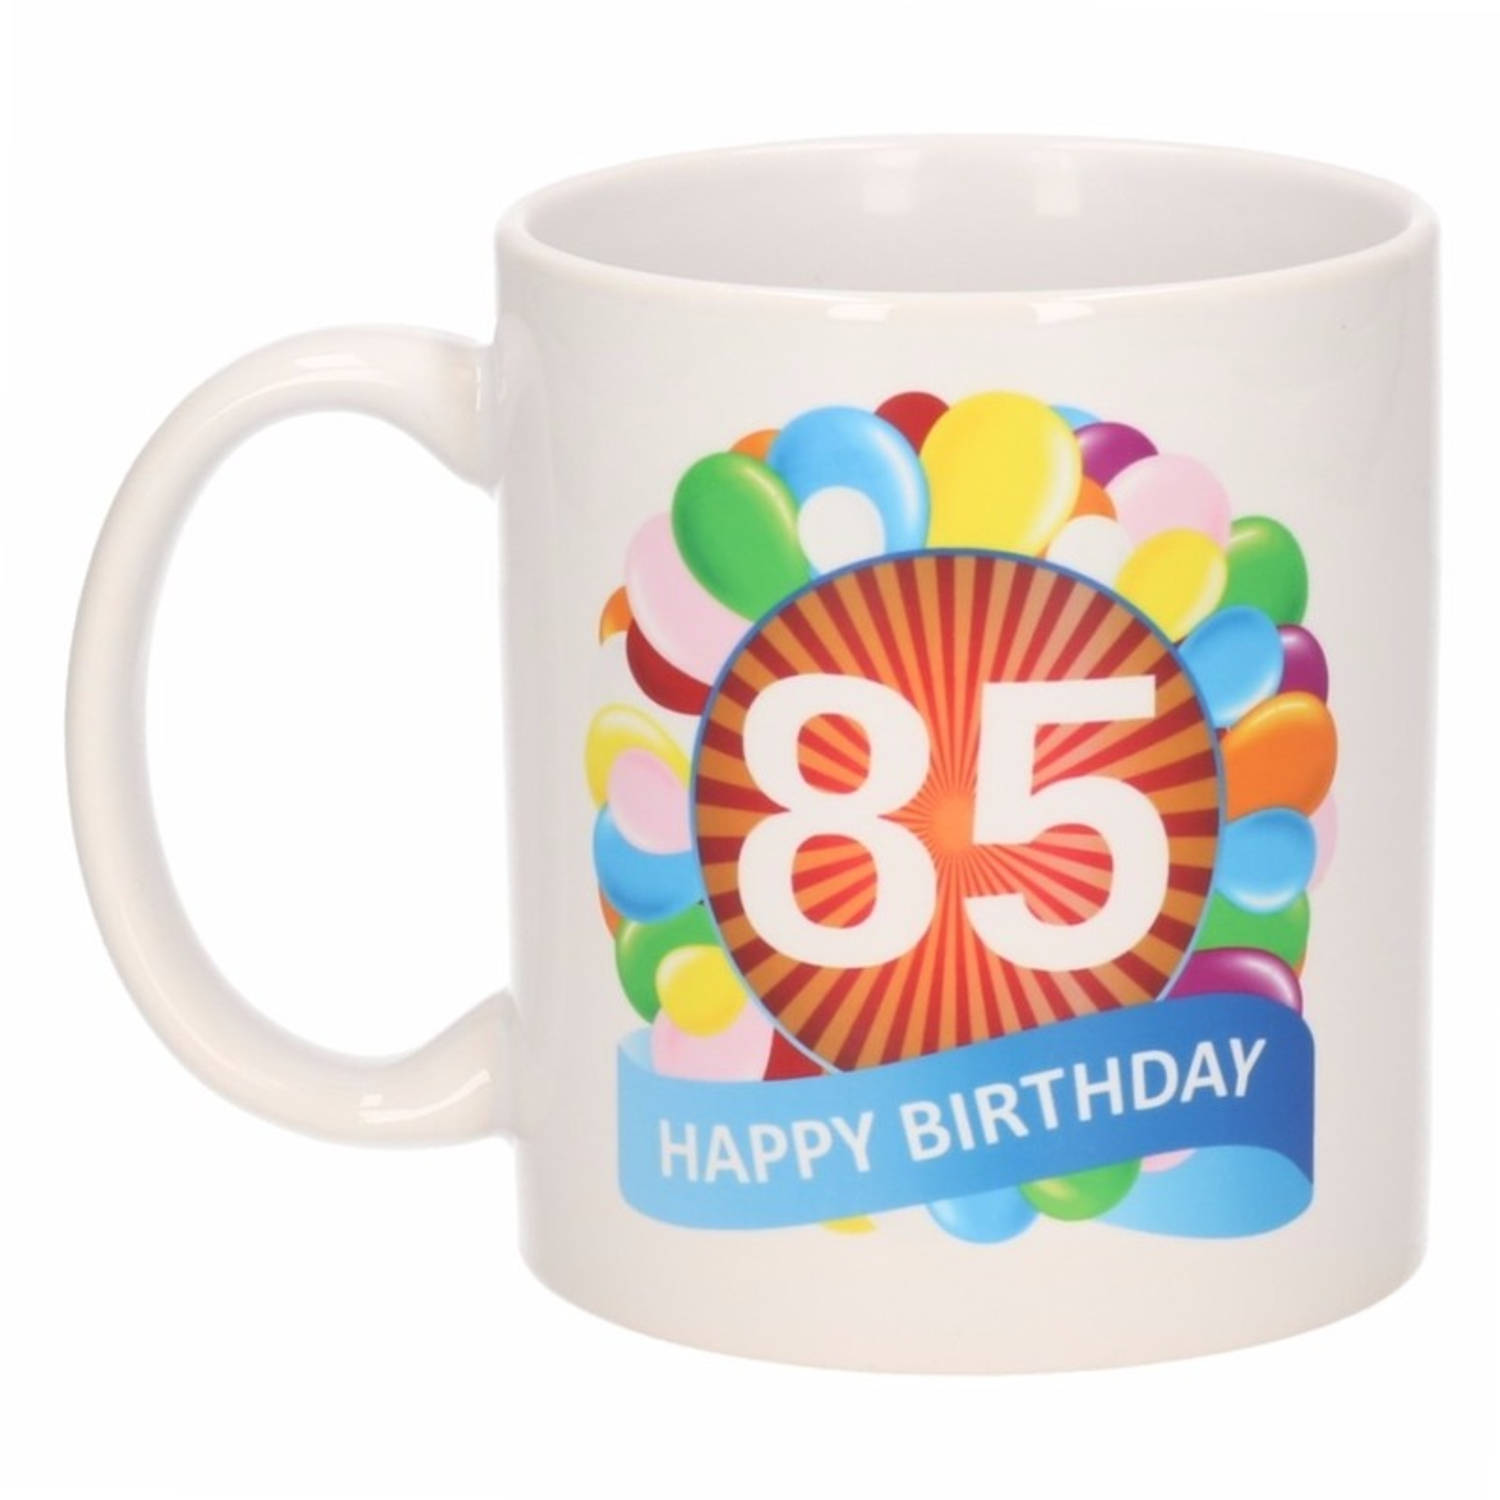 Verjaardag ballonnen mok / beker 85 jaar